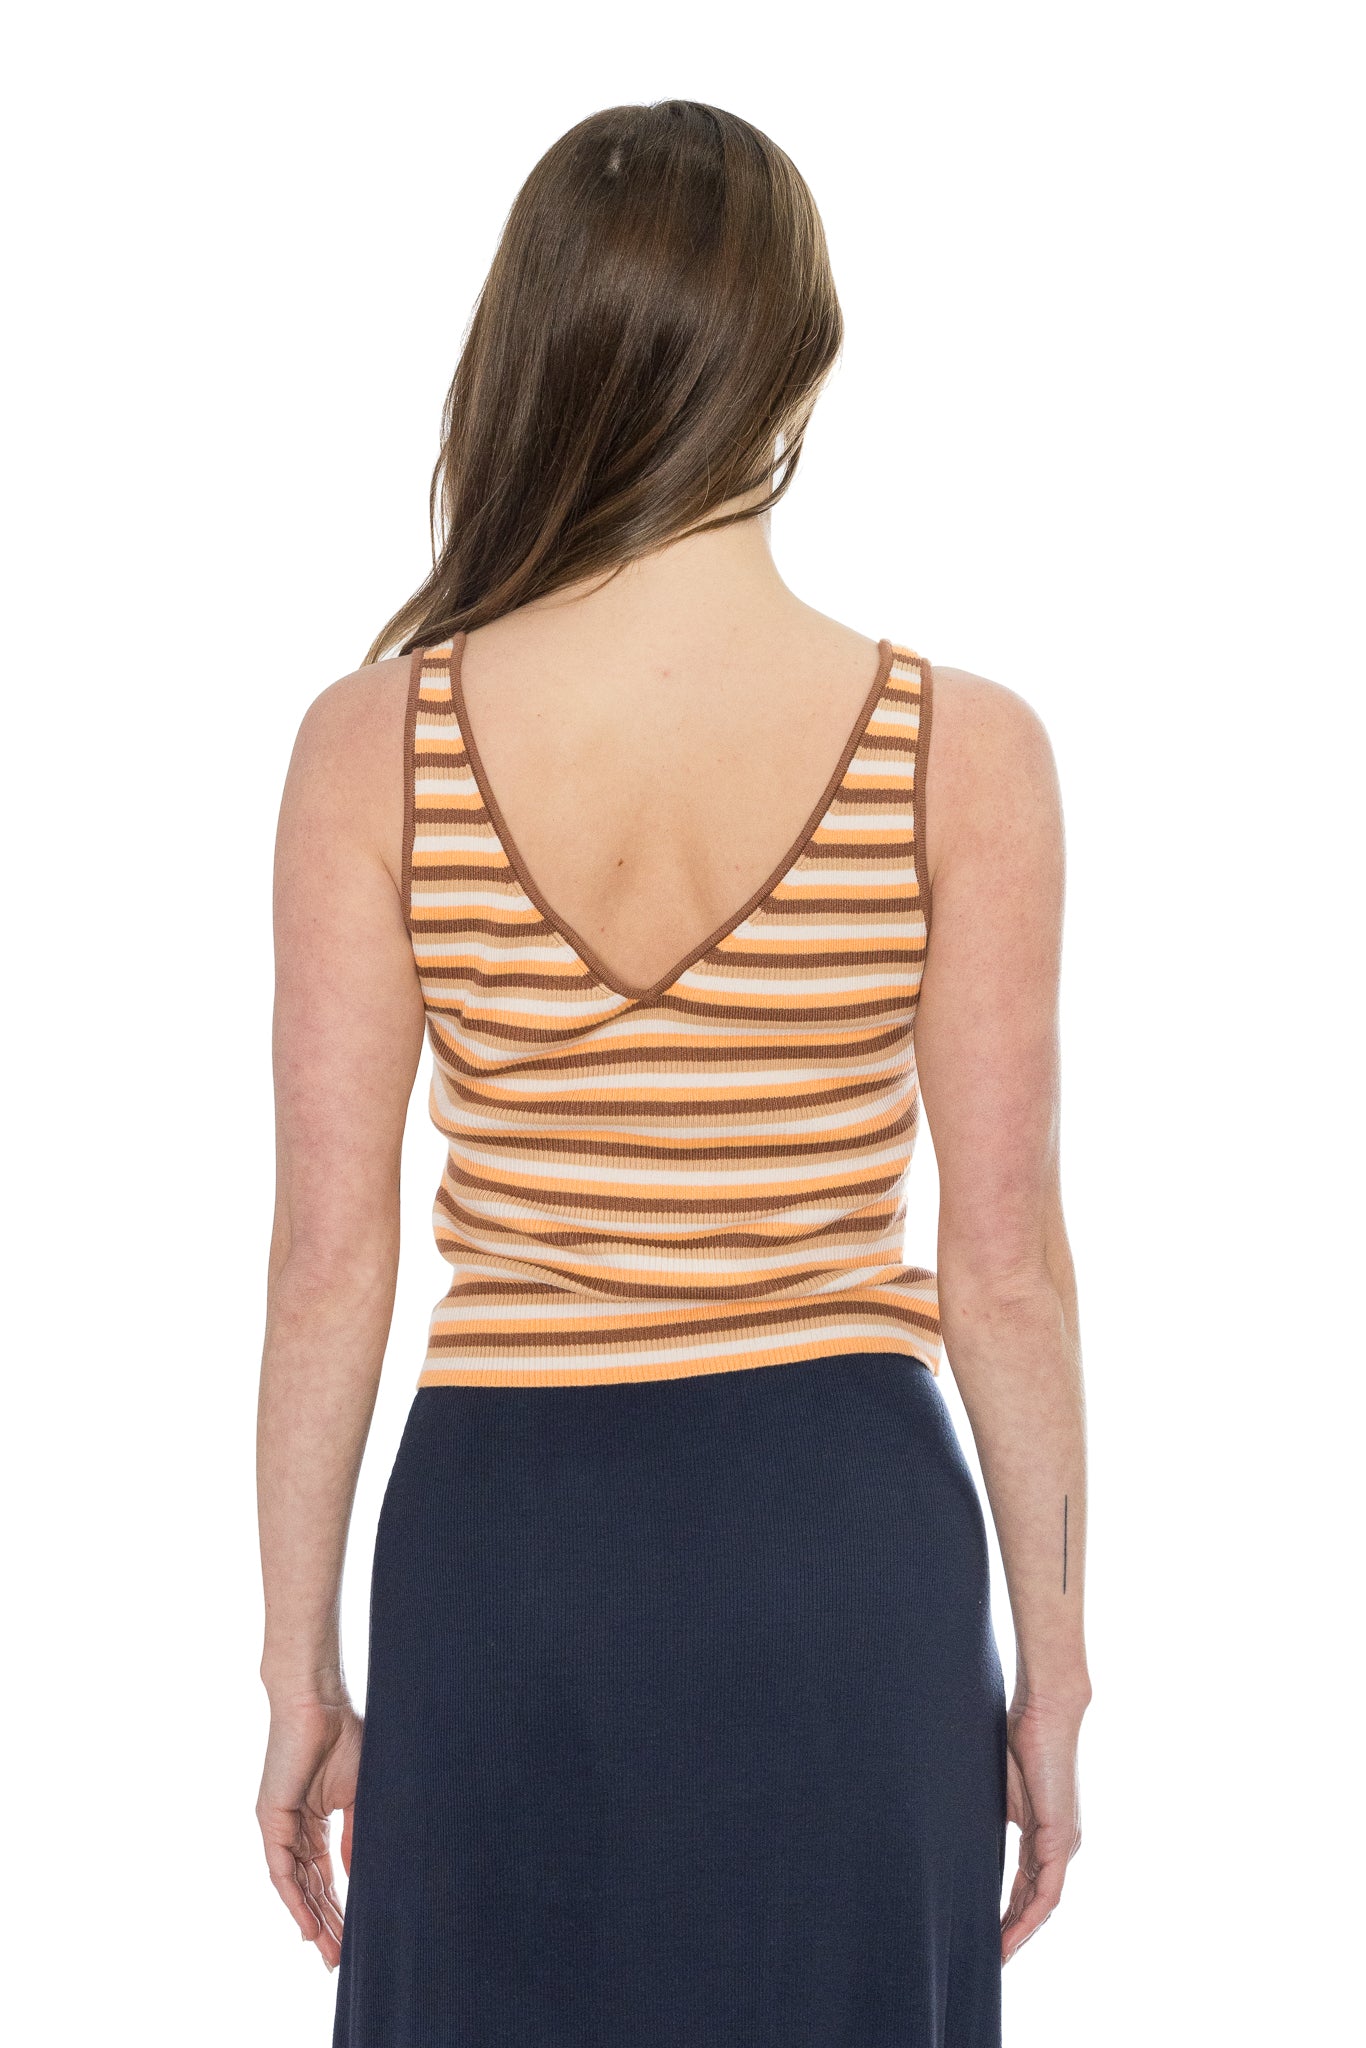 Delia Sweater Tank Tangerine Stripe